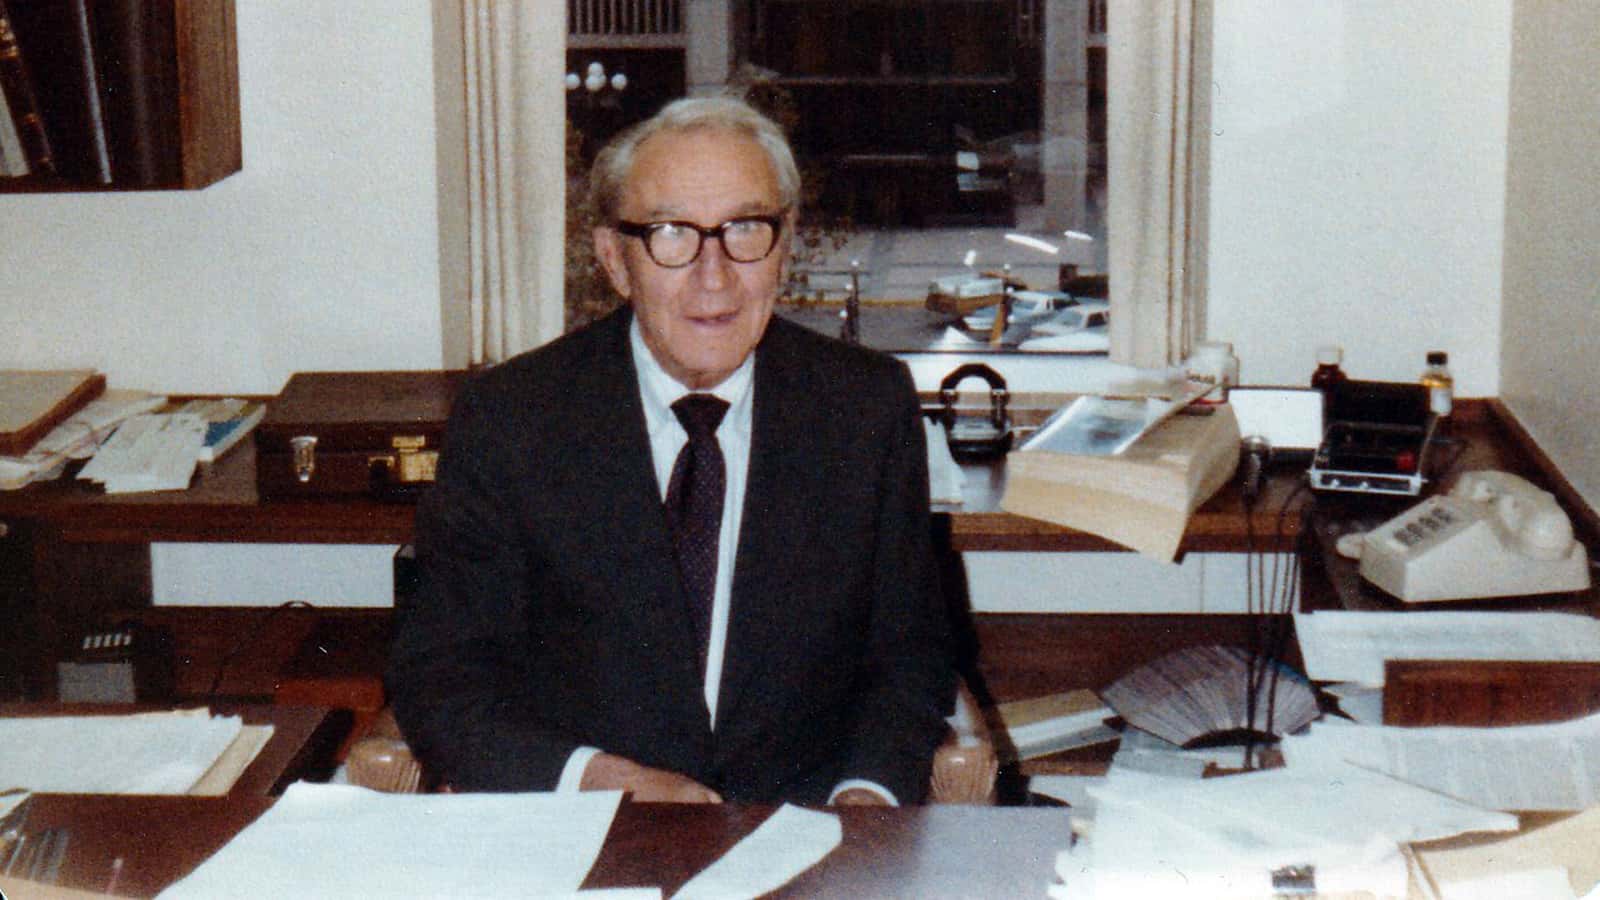 Photo of Stewart Mark at his desk